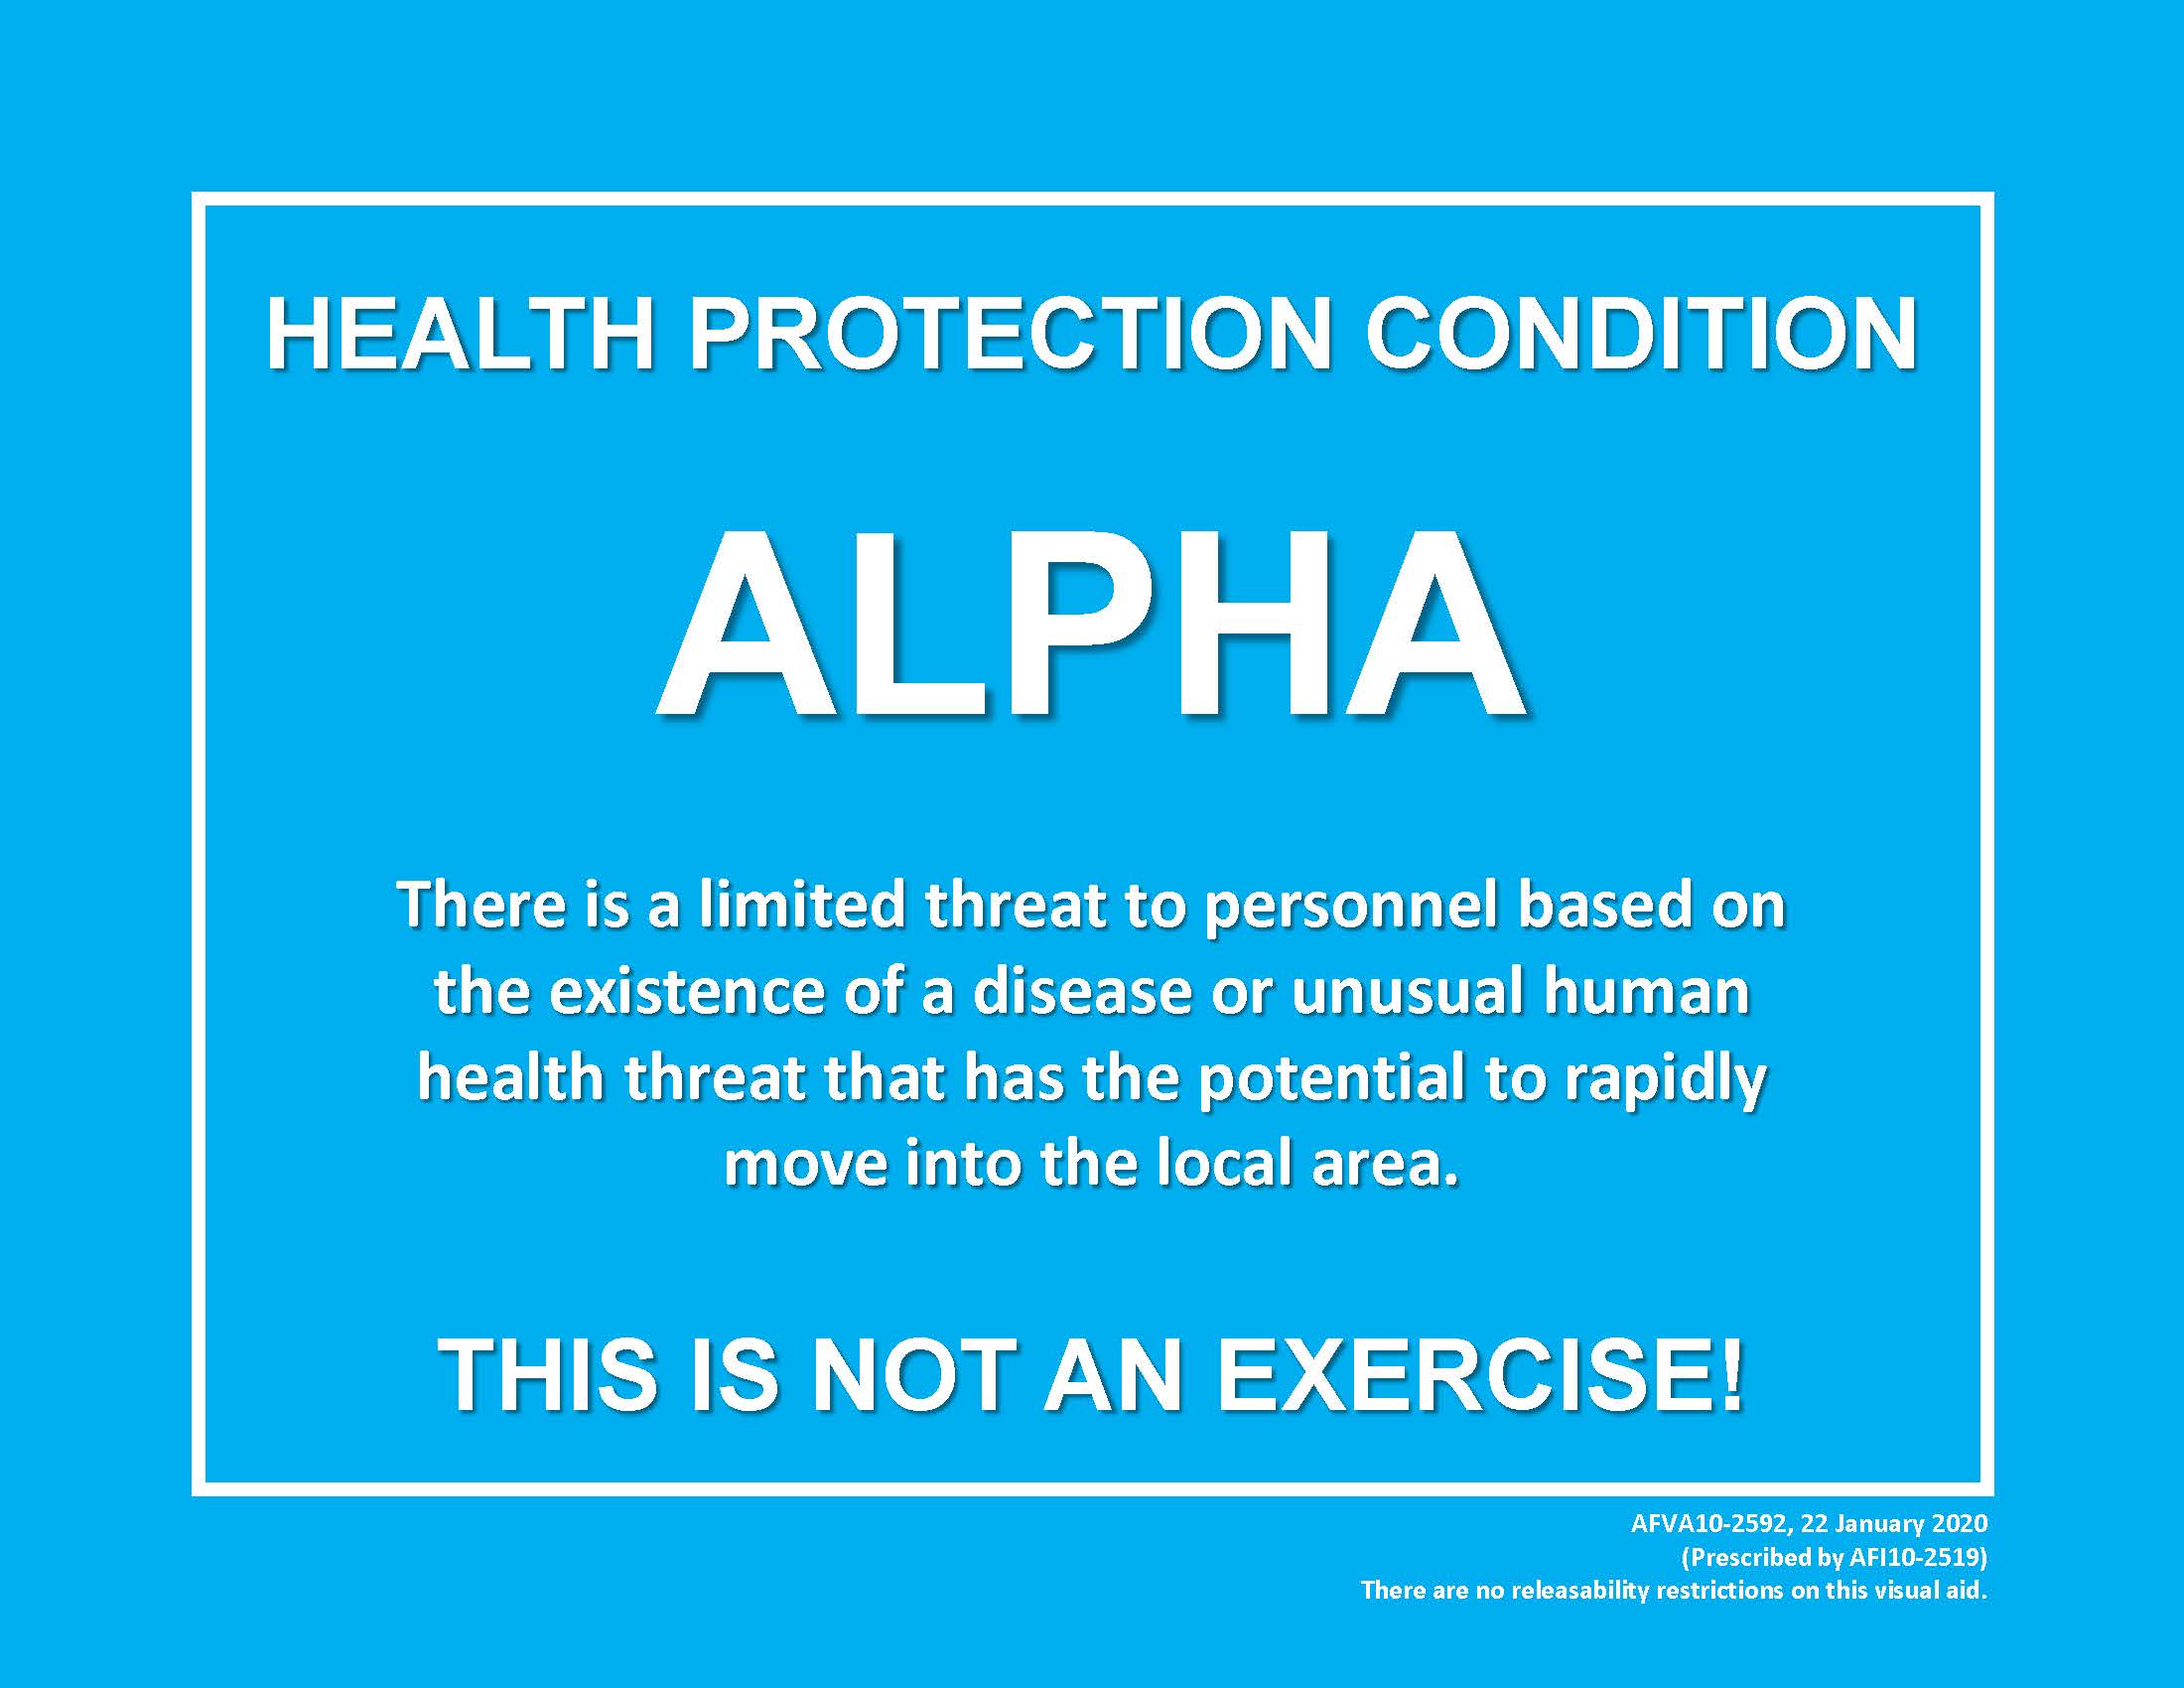 Health Protection Condition ALPHA